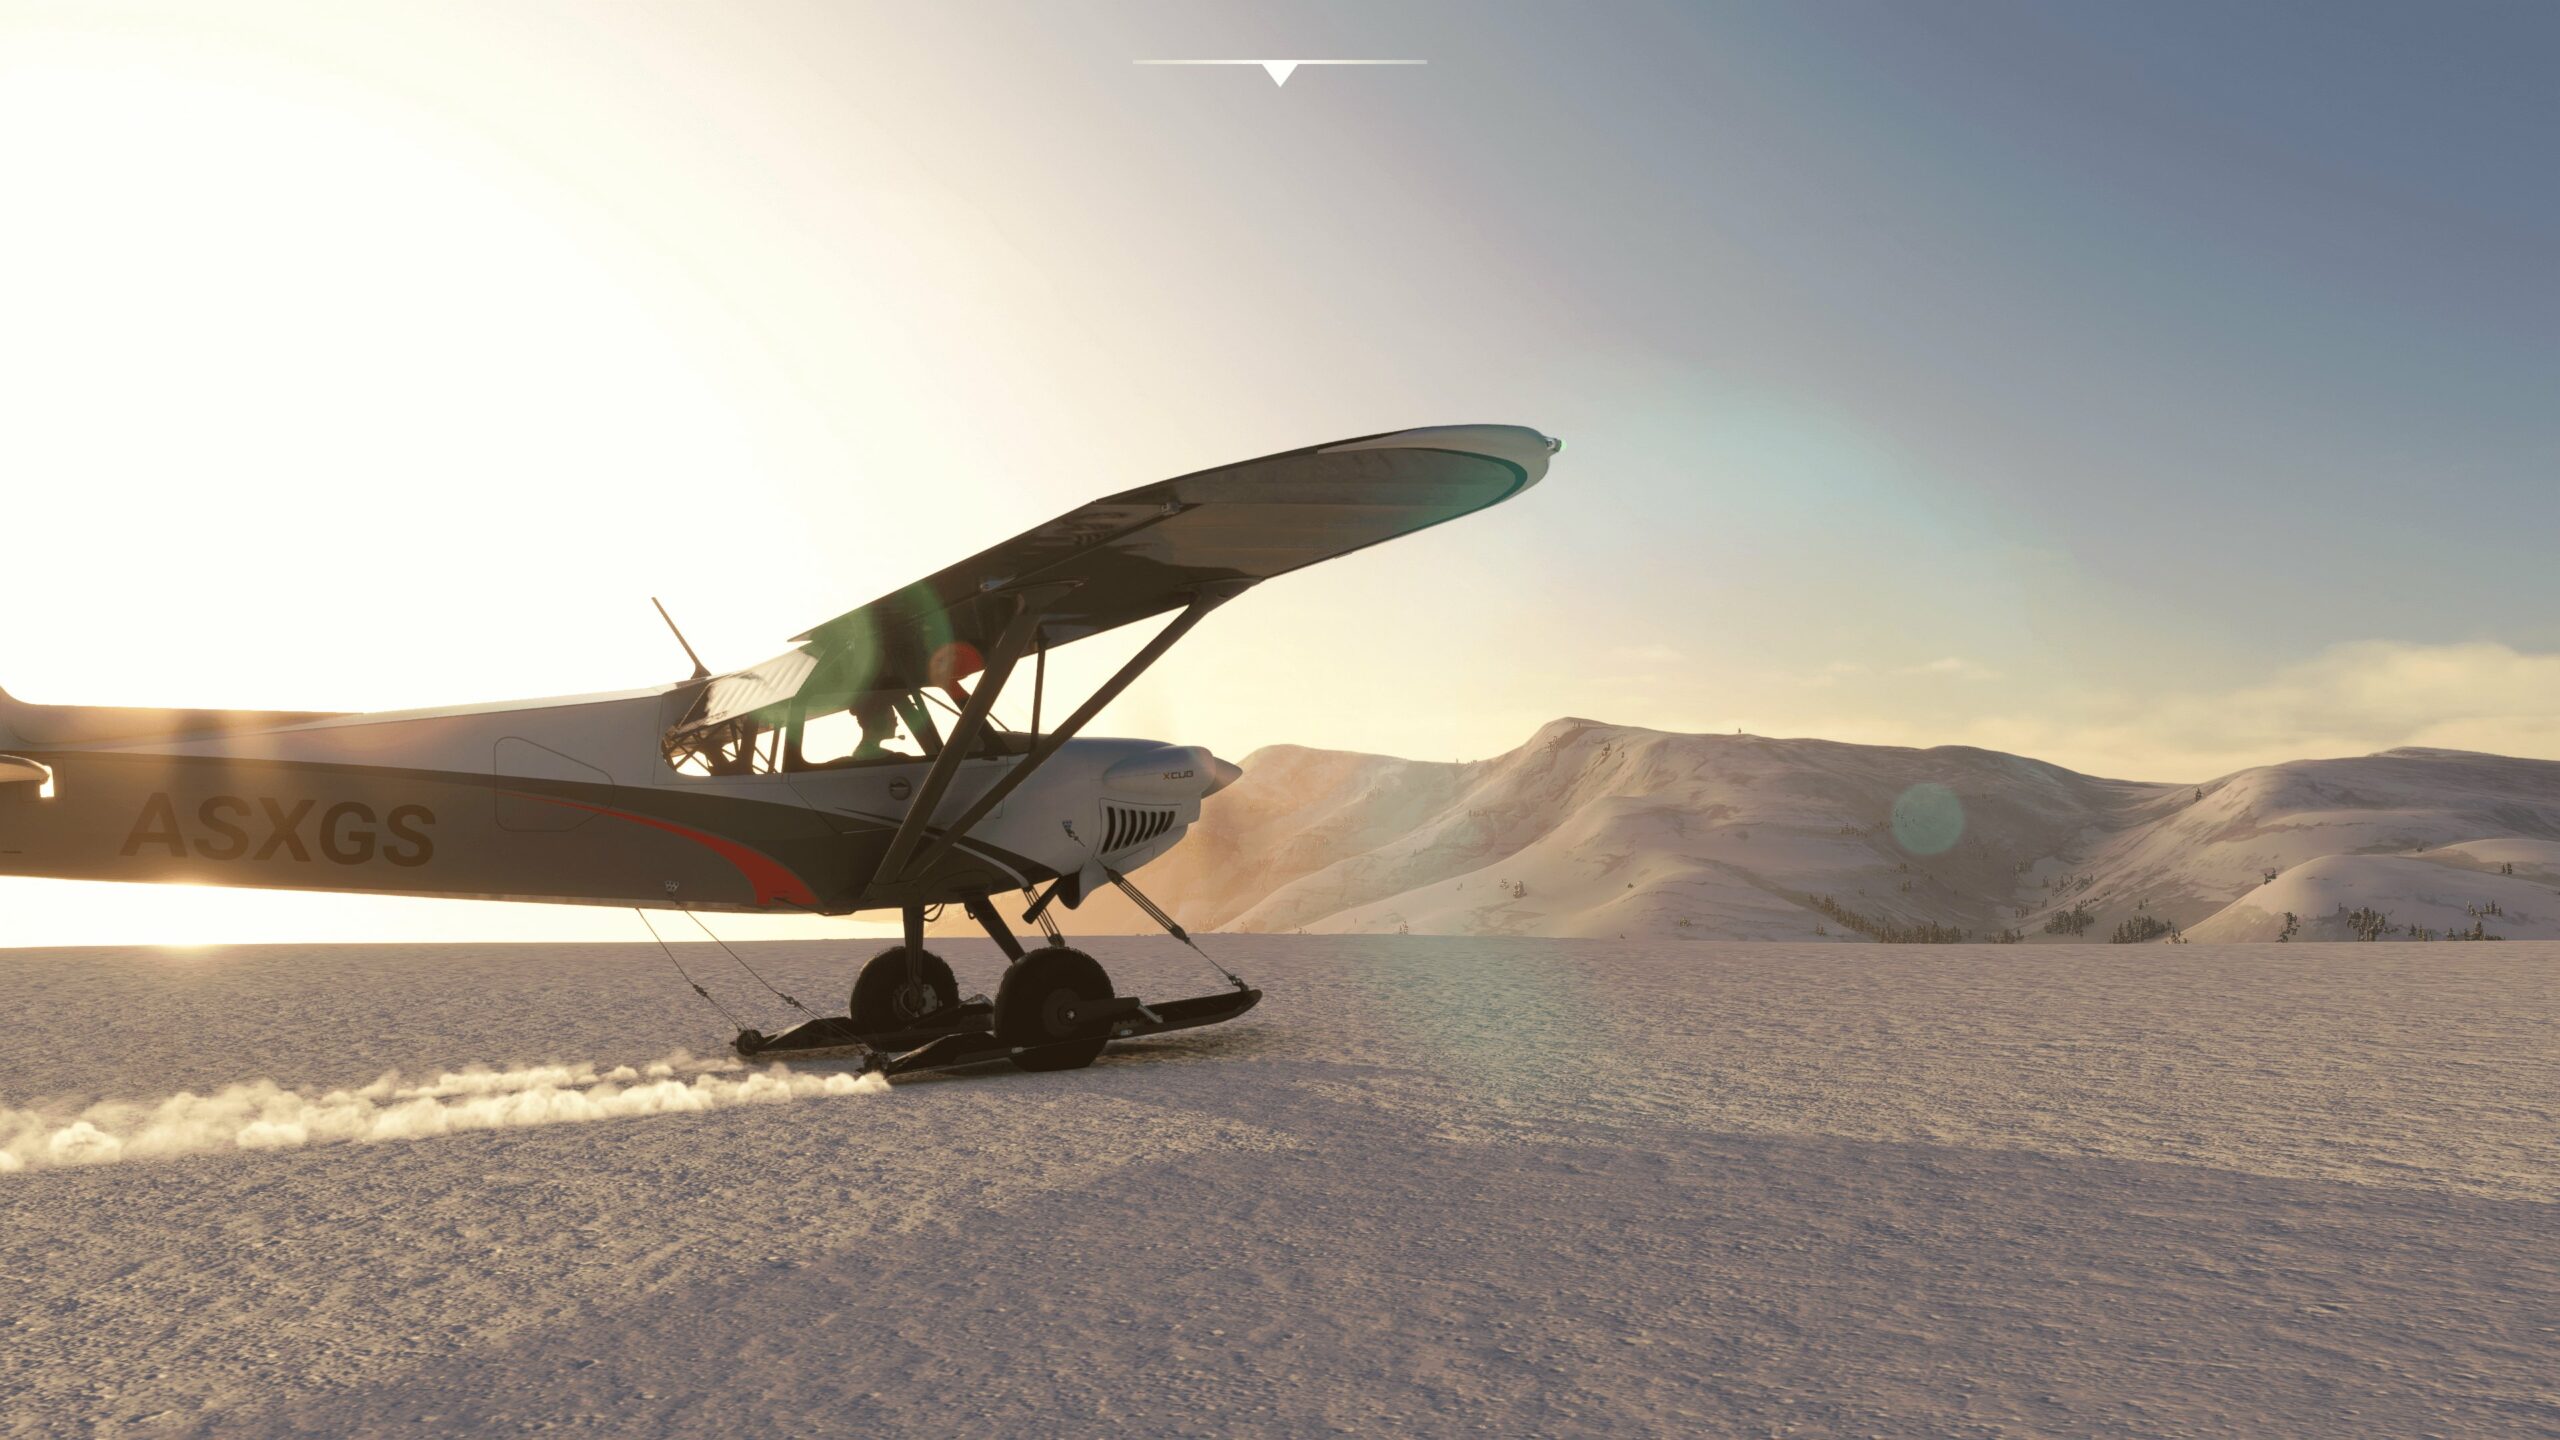 Microsoft's Flight Simulator 2020 - Pc